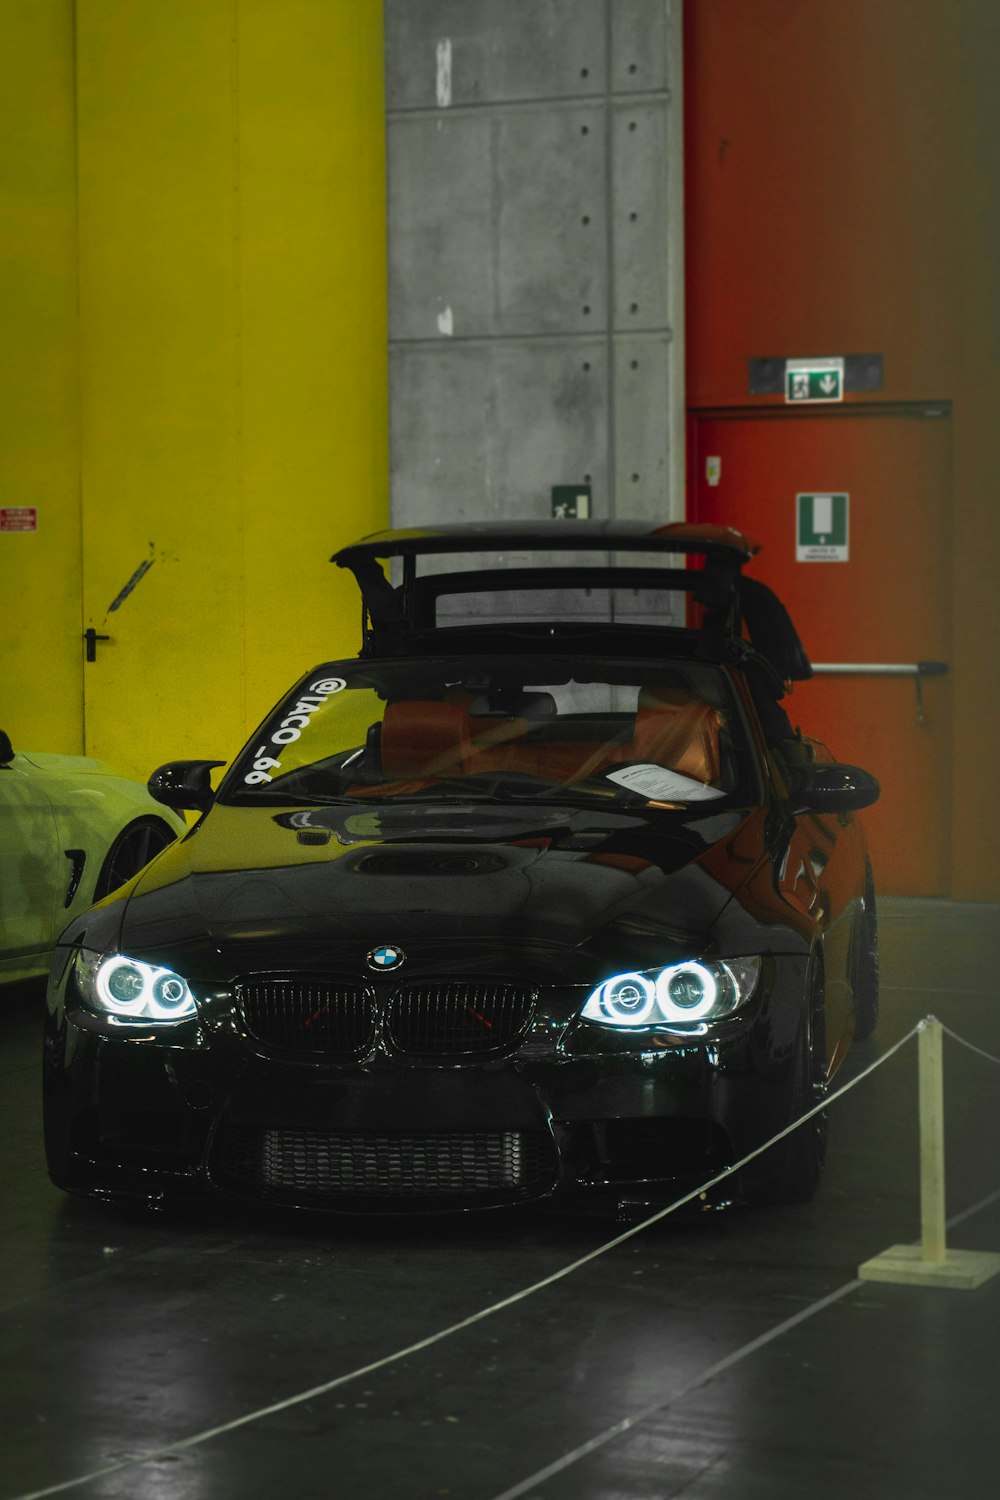 a black car in a garage